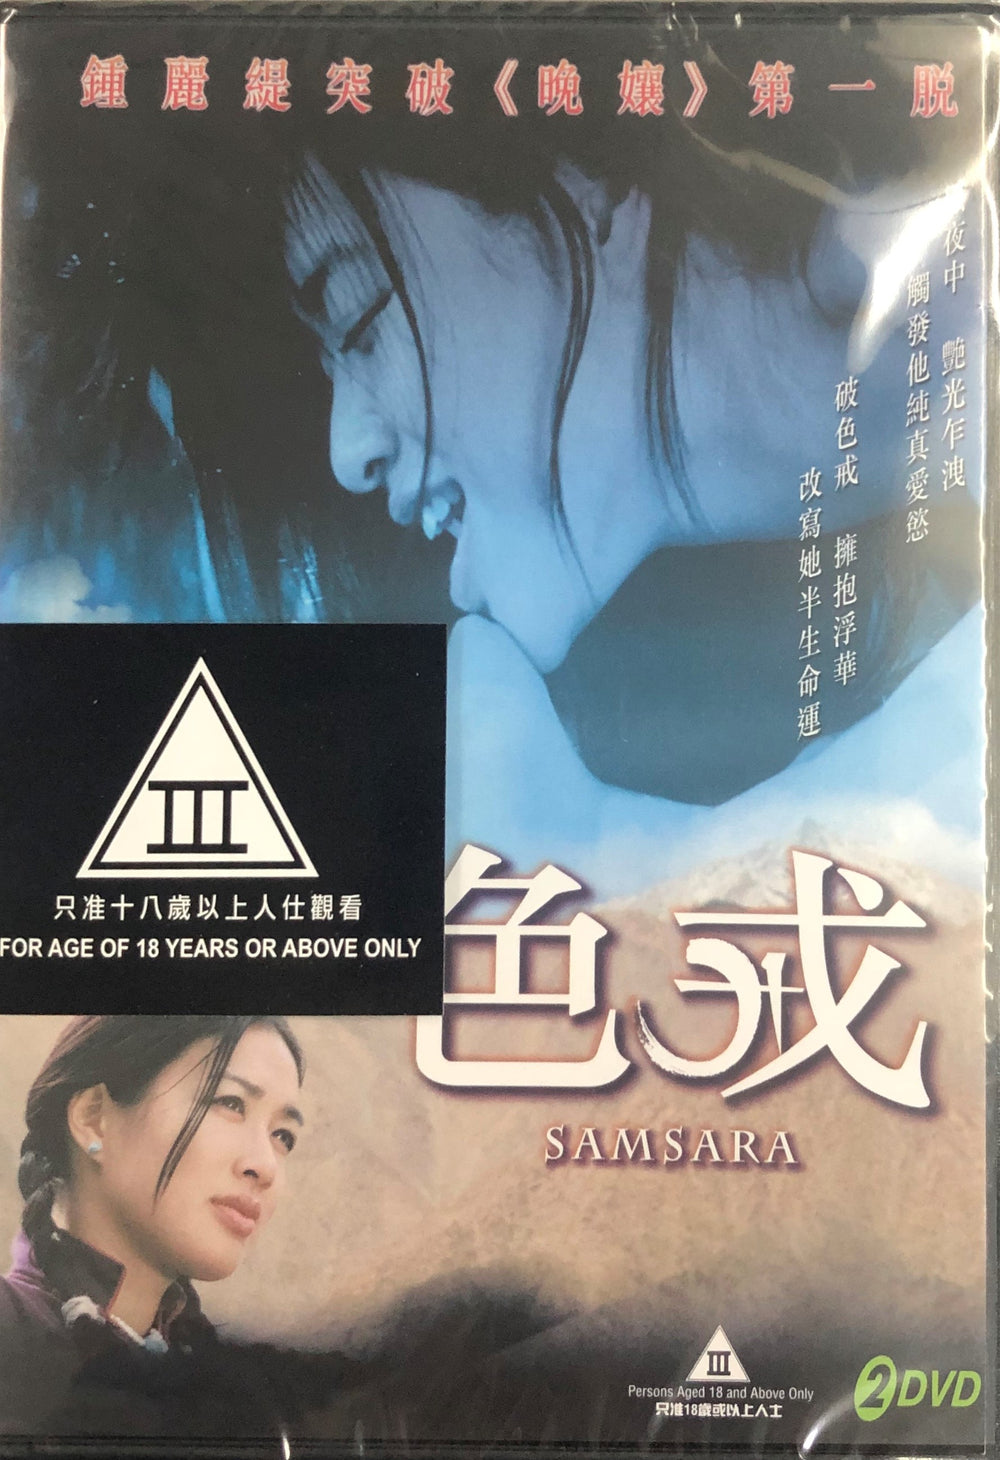 SAMSARA 色戒 2002 (HONG KONG MOVIE) DVD ENGLISH SUB (REGION FREE)